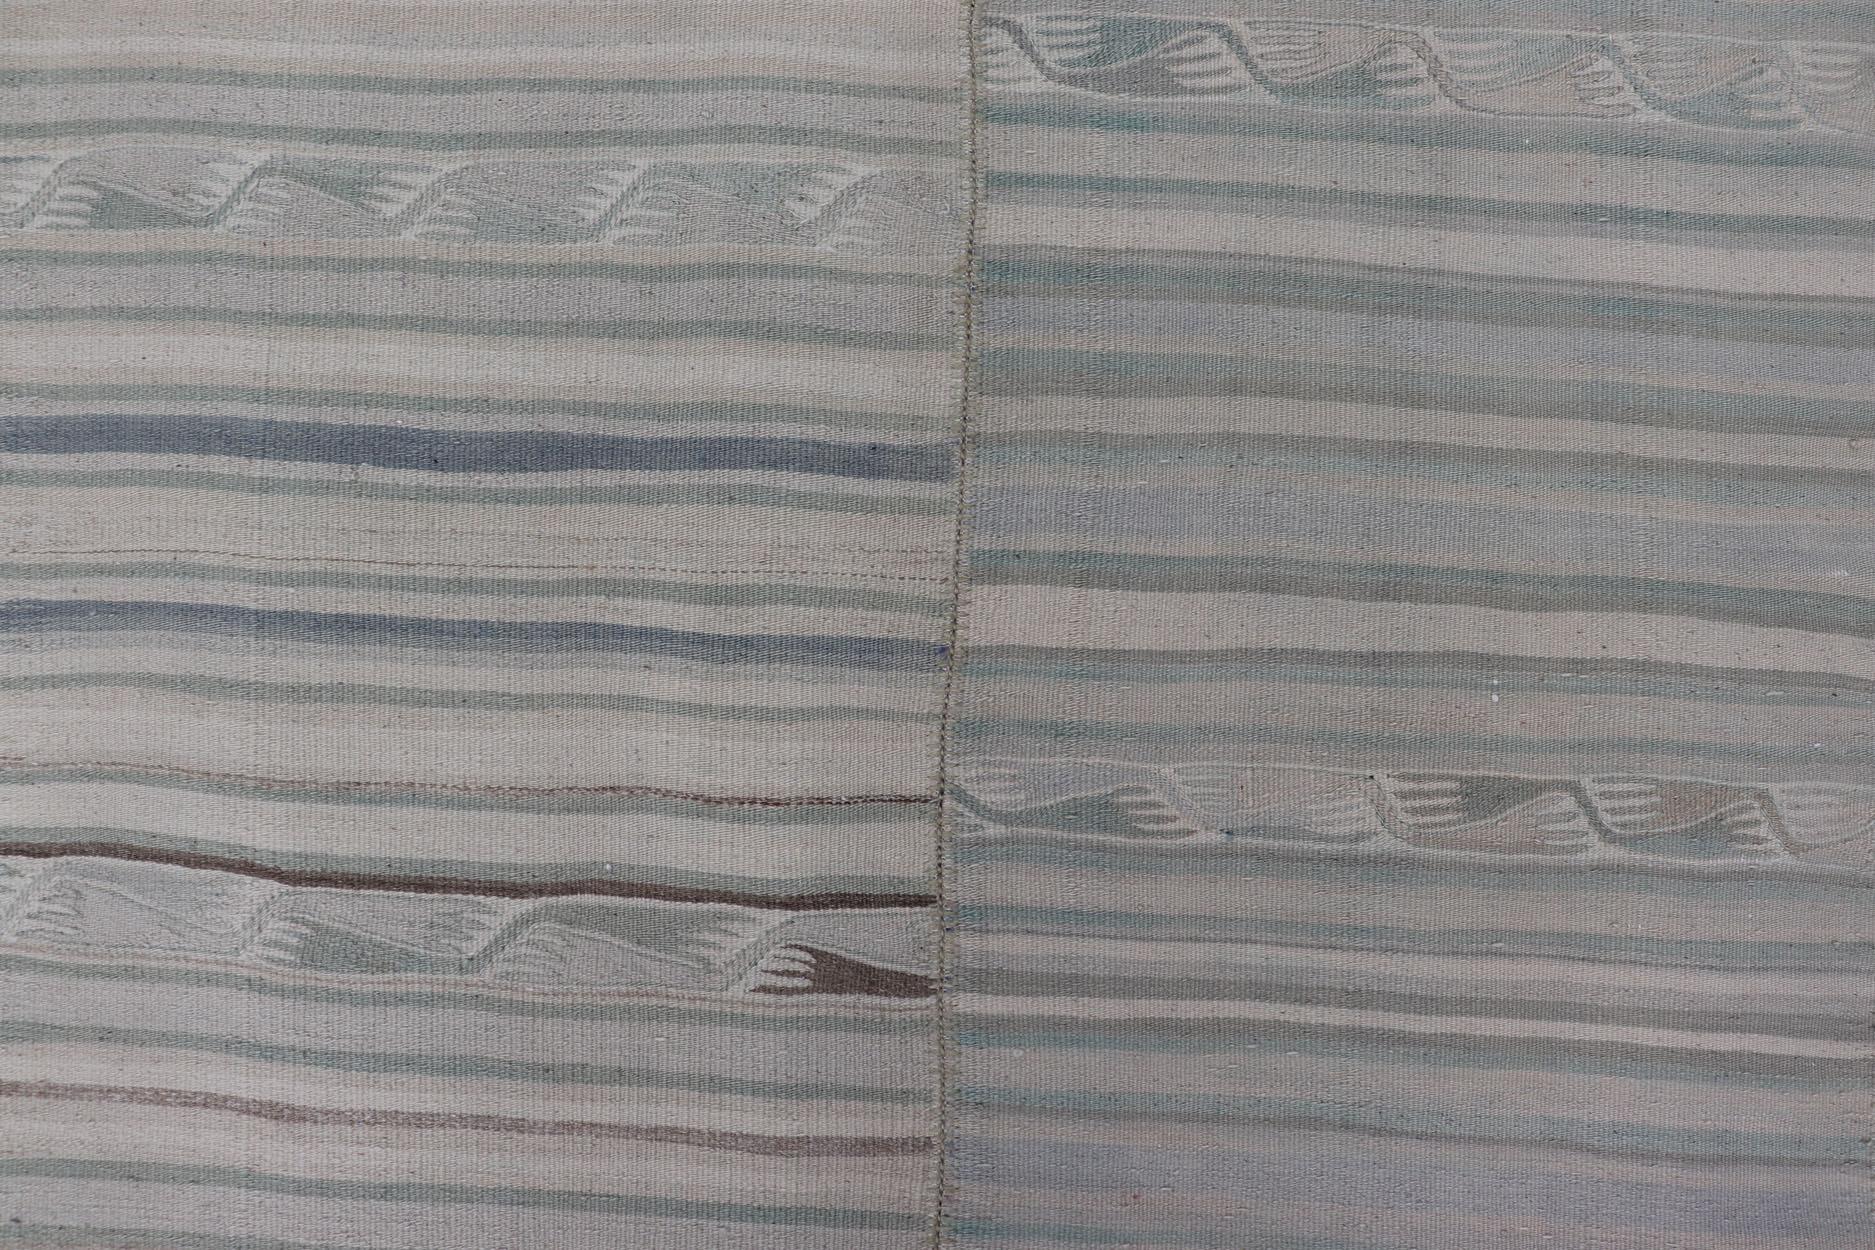 Vintage Turkish Paneled Flat-Weave Kilim in Muted Colors With Stripe Design. Keivan Woven Arts / rug EN-14094 country of origin / type: Turkey / Kilim, circa mid-20th century
Measures: 9'2 x 11'6 